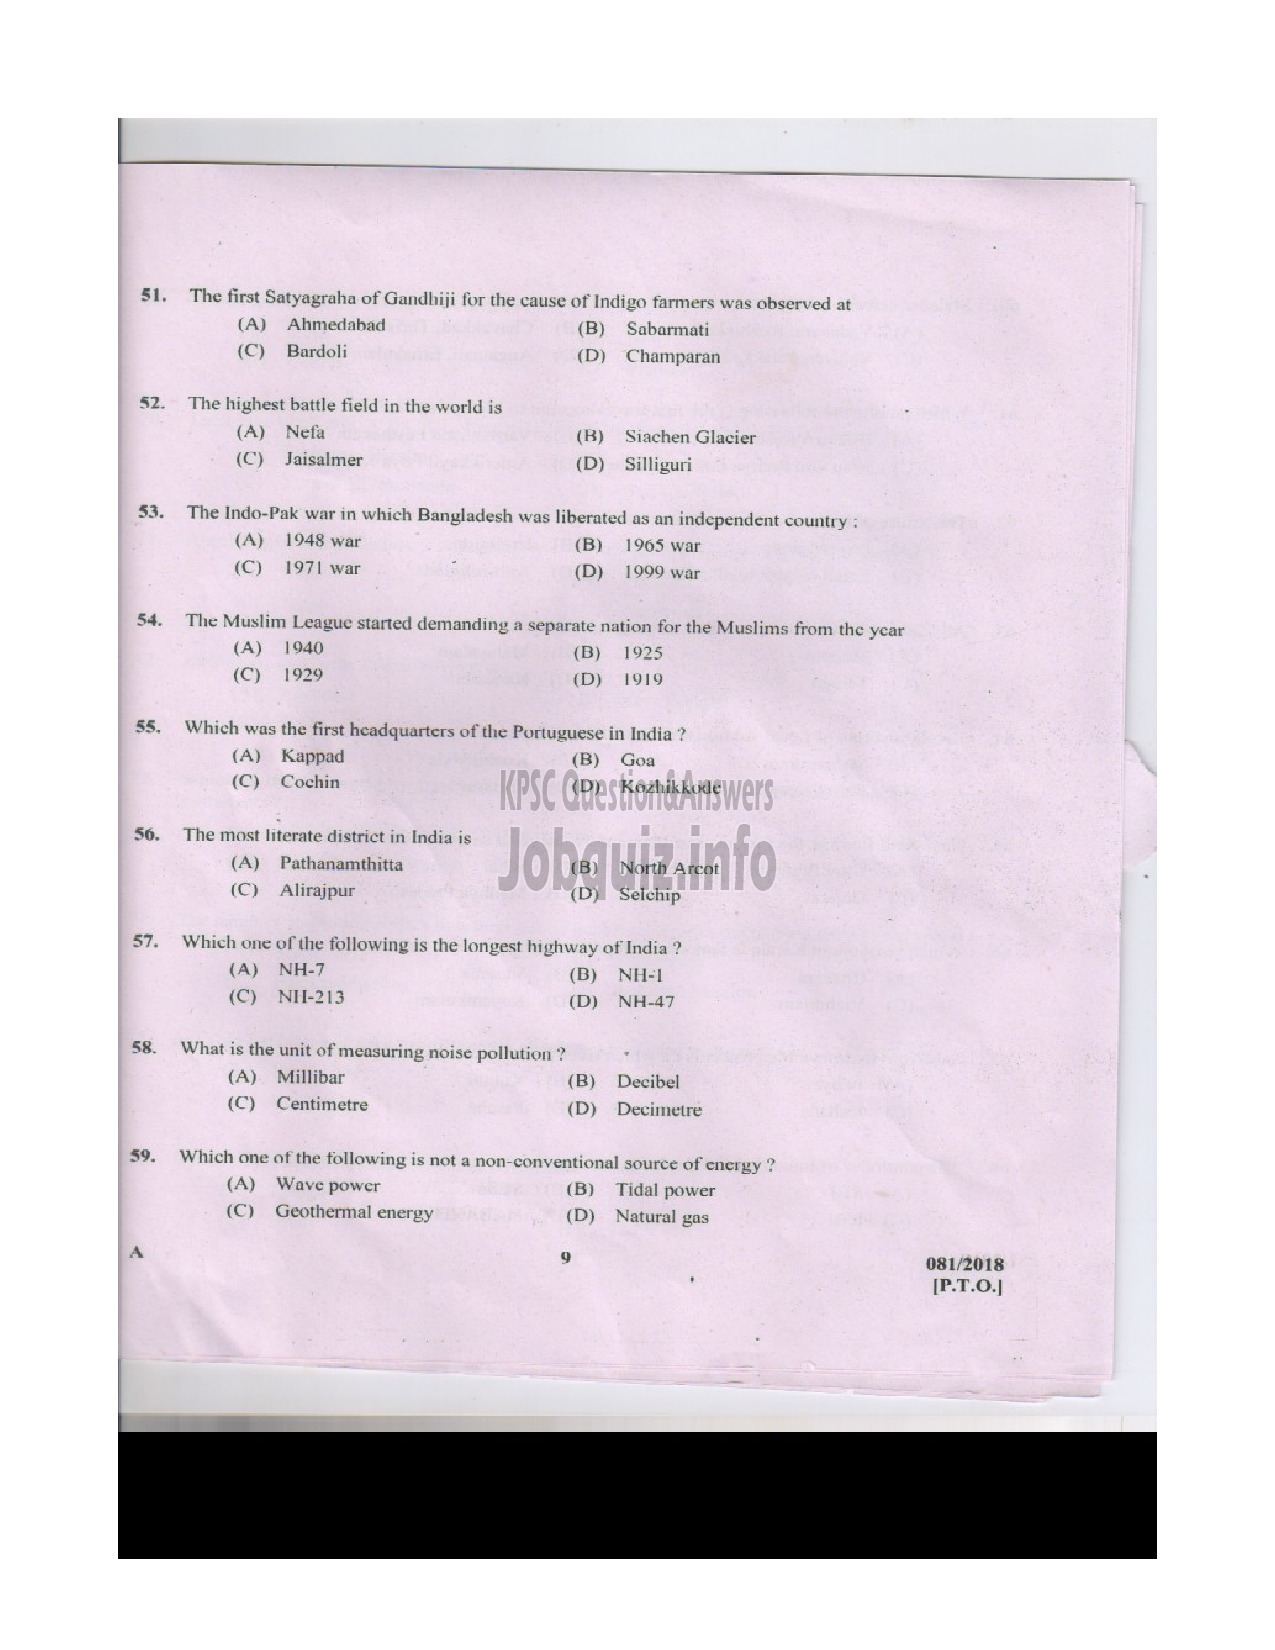 Kerala PSC Question Paper - ASSISTANT STENOGRAPHER CONFIDENTIAL ASST.GR.II L.D.TYPIST CLERK TYPIST KMTWWFB GOVT.OWNED-8